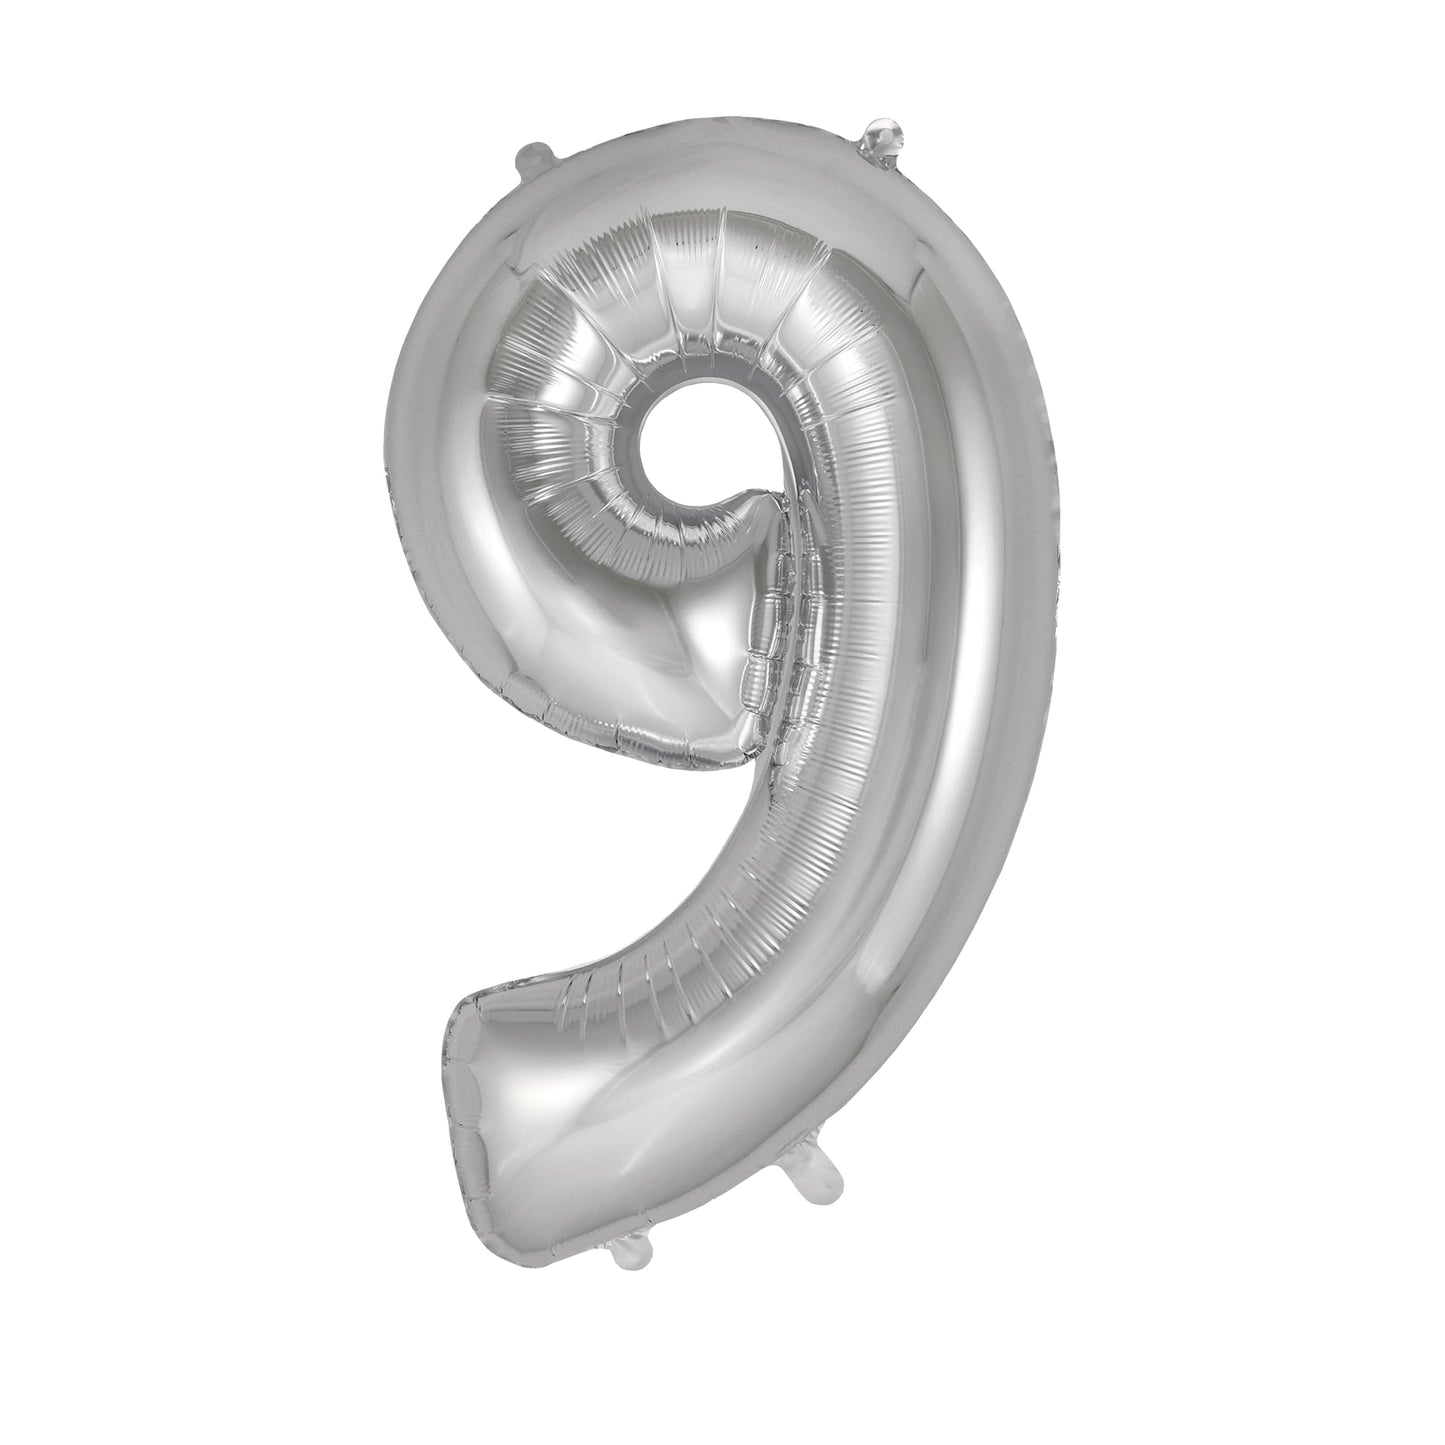 NUMERO ARGENTATO "9" – Foil Balloon